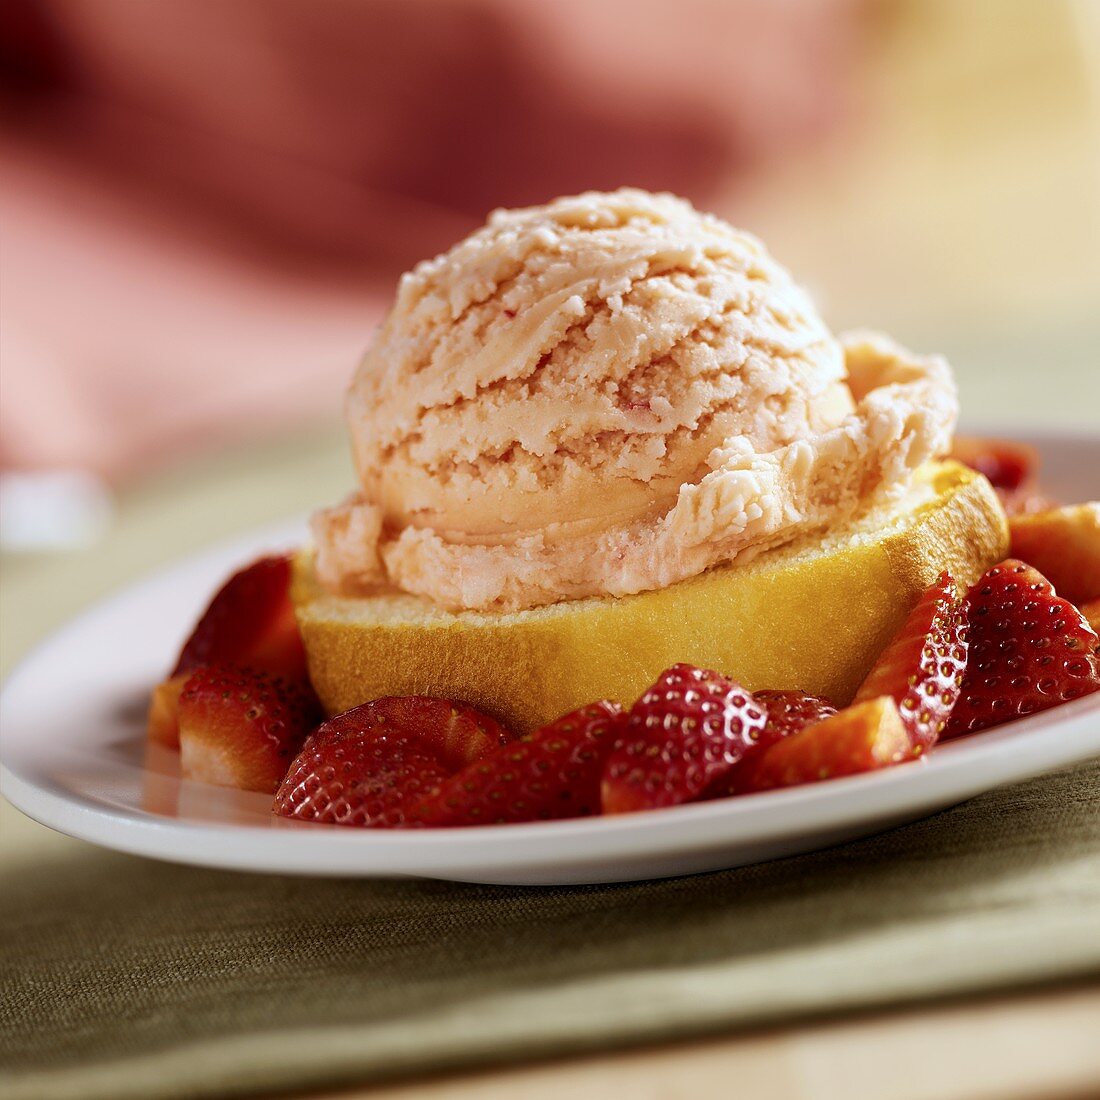 A slice of sponge cake with strawberry ice cream & fresh strawberries